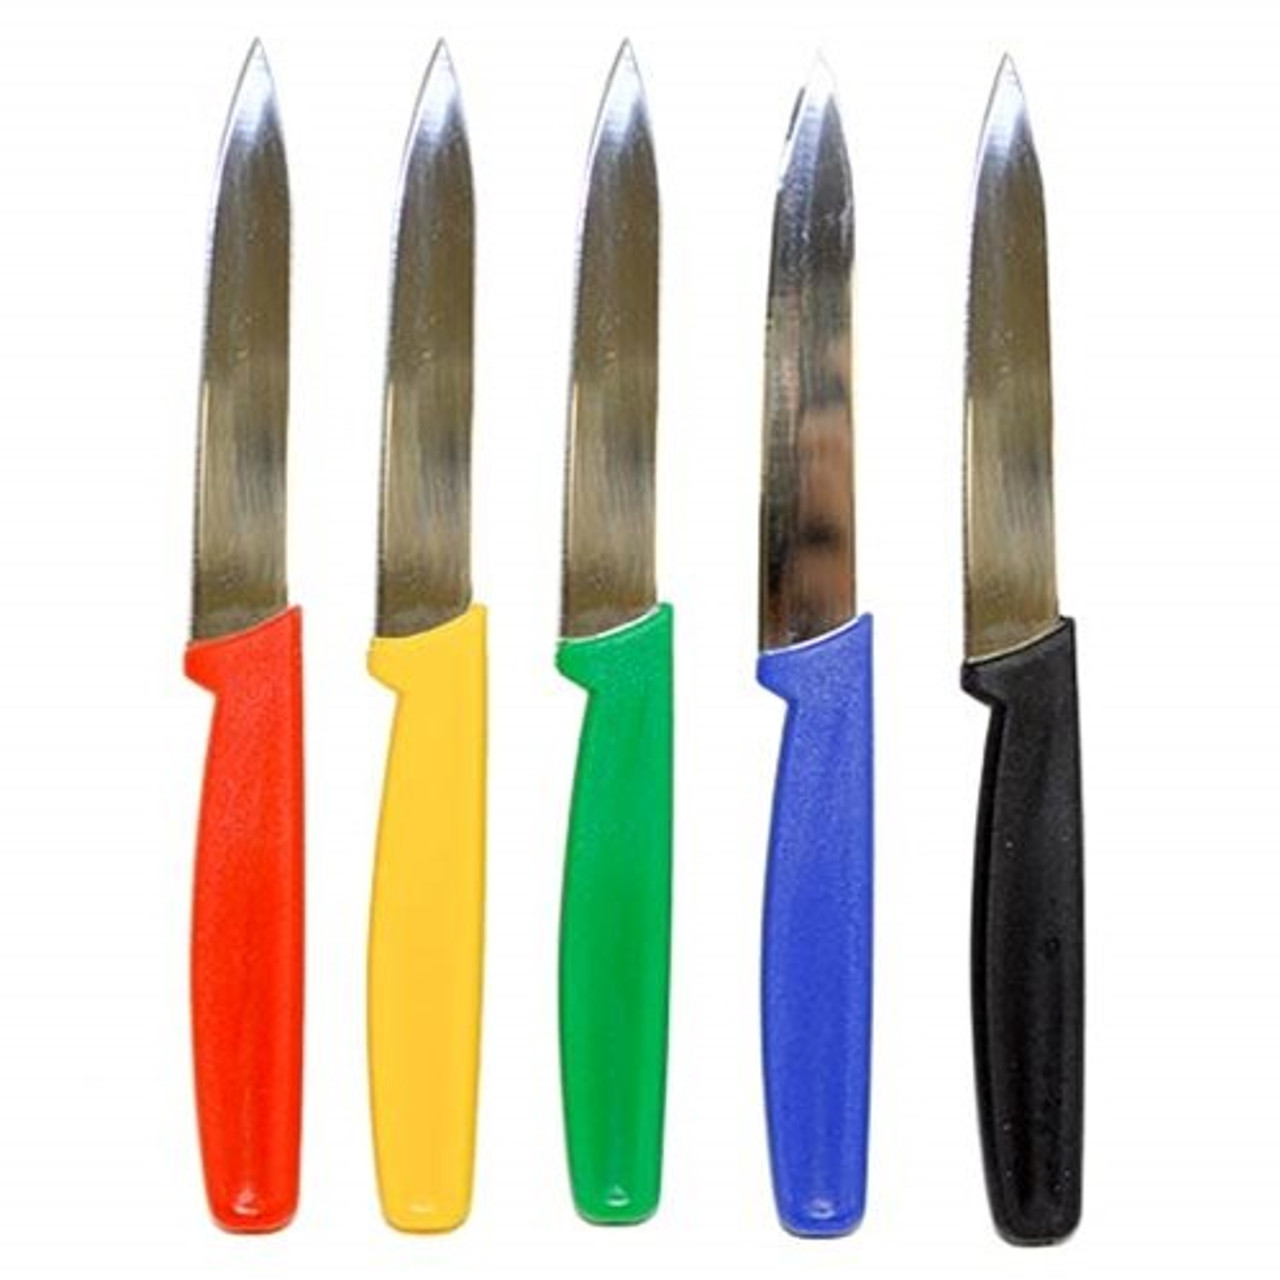 Blue Paring Knife (4) - Walton's